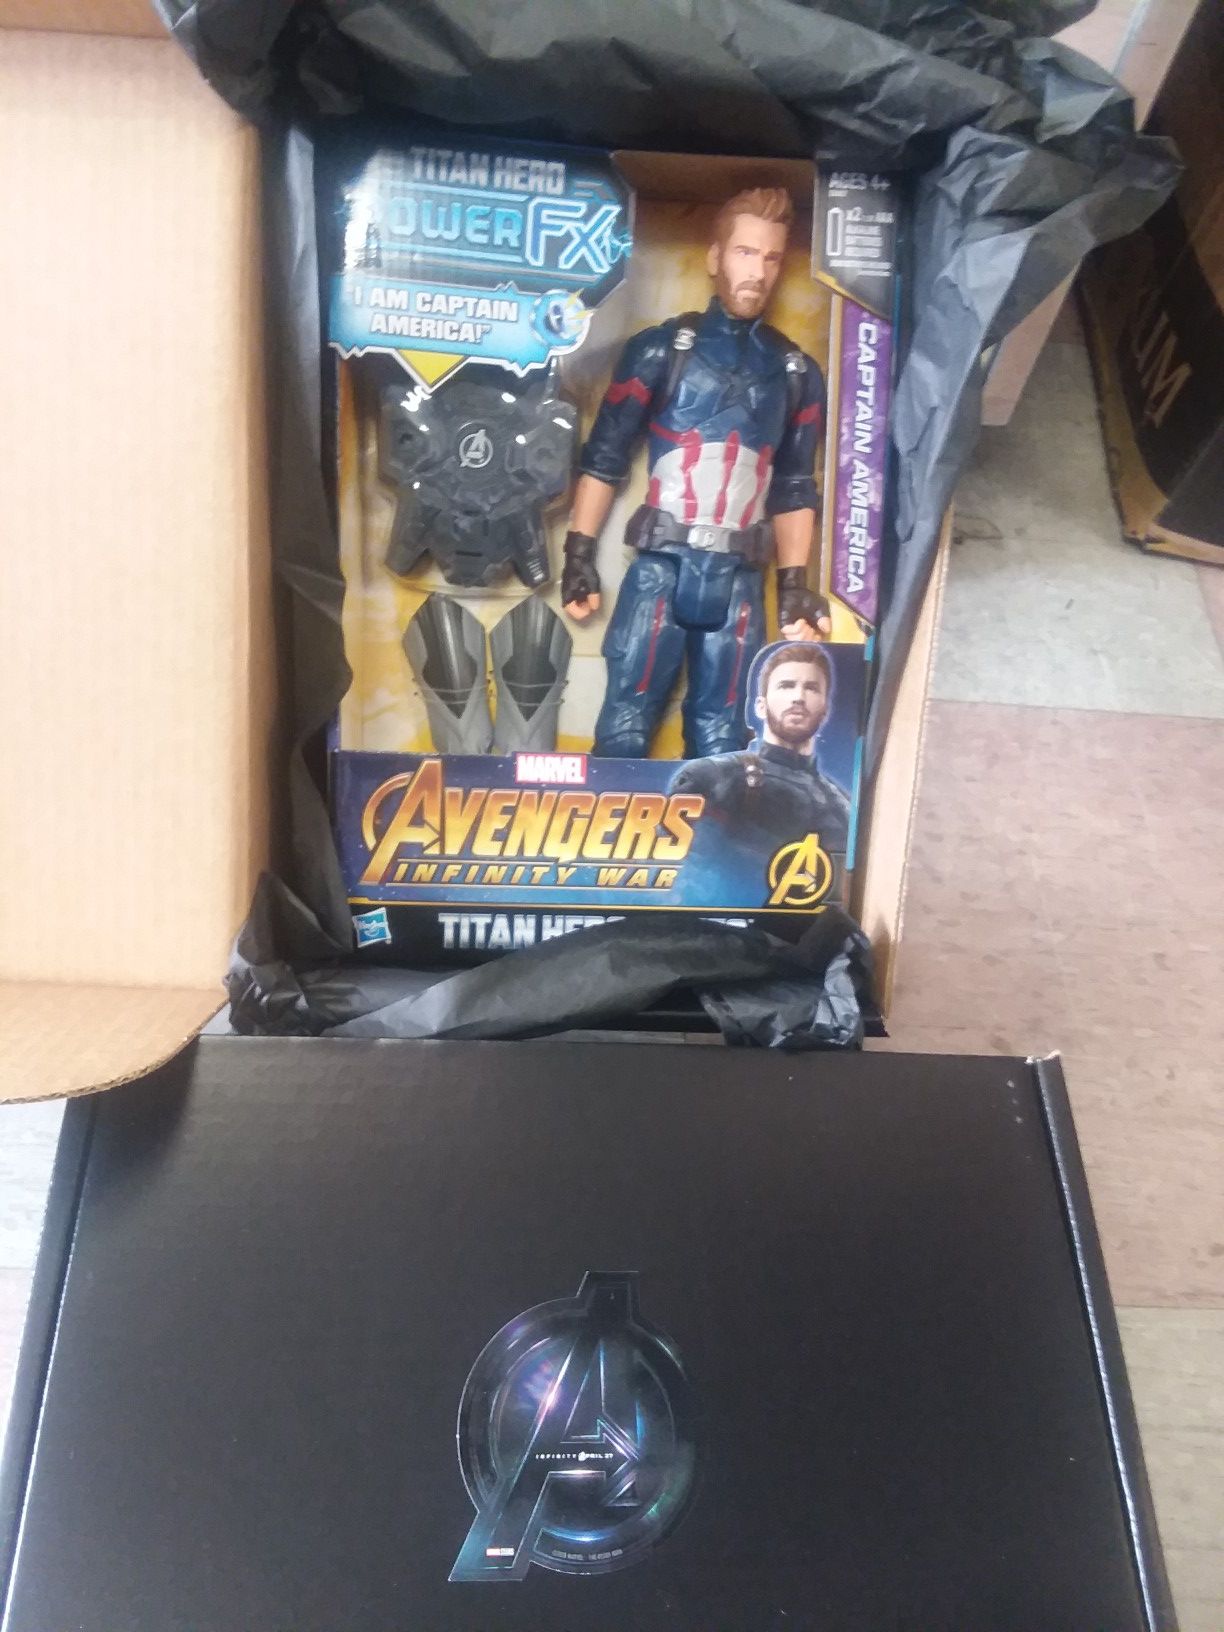 Avengers Captain America in the original box